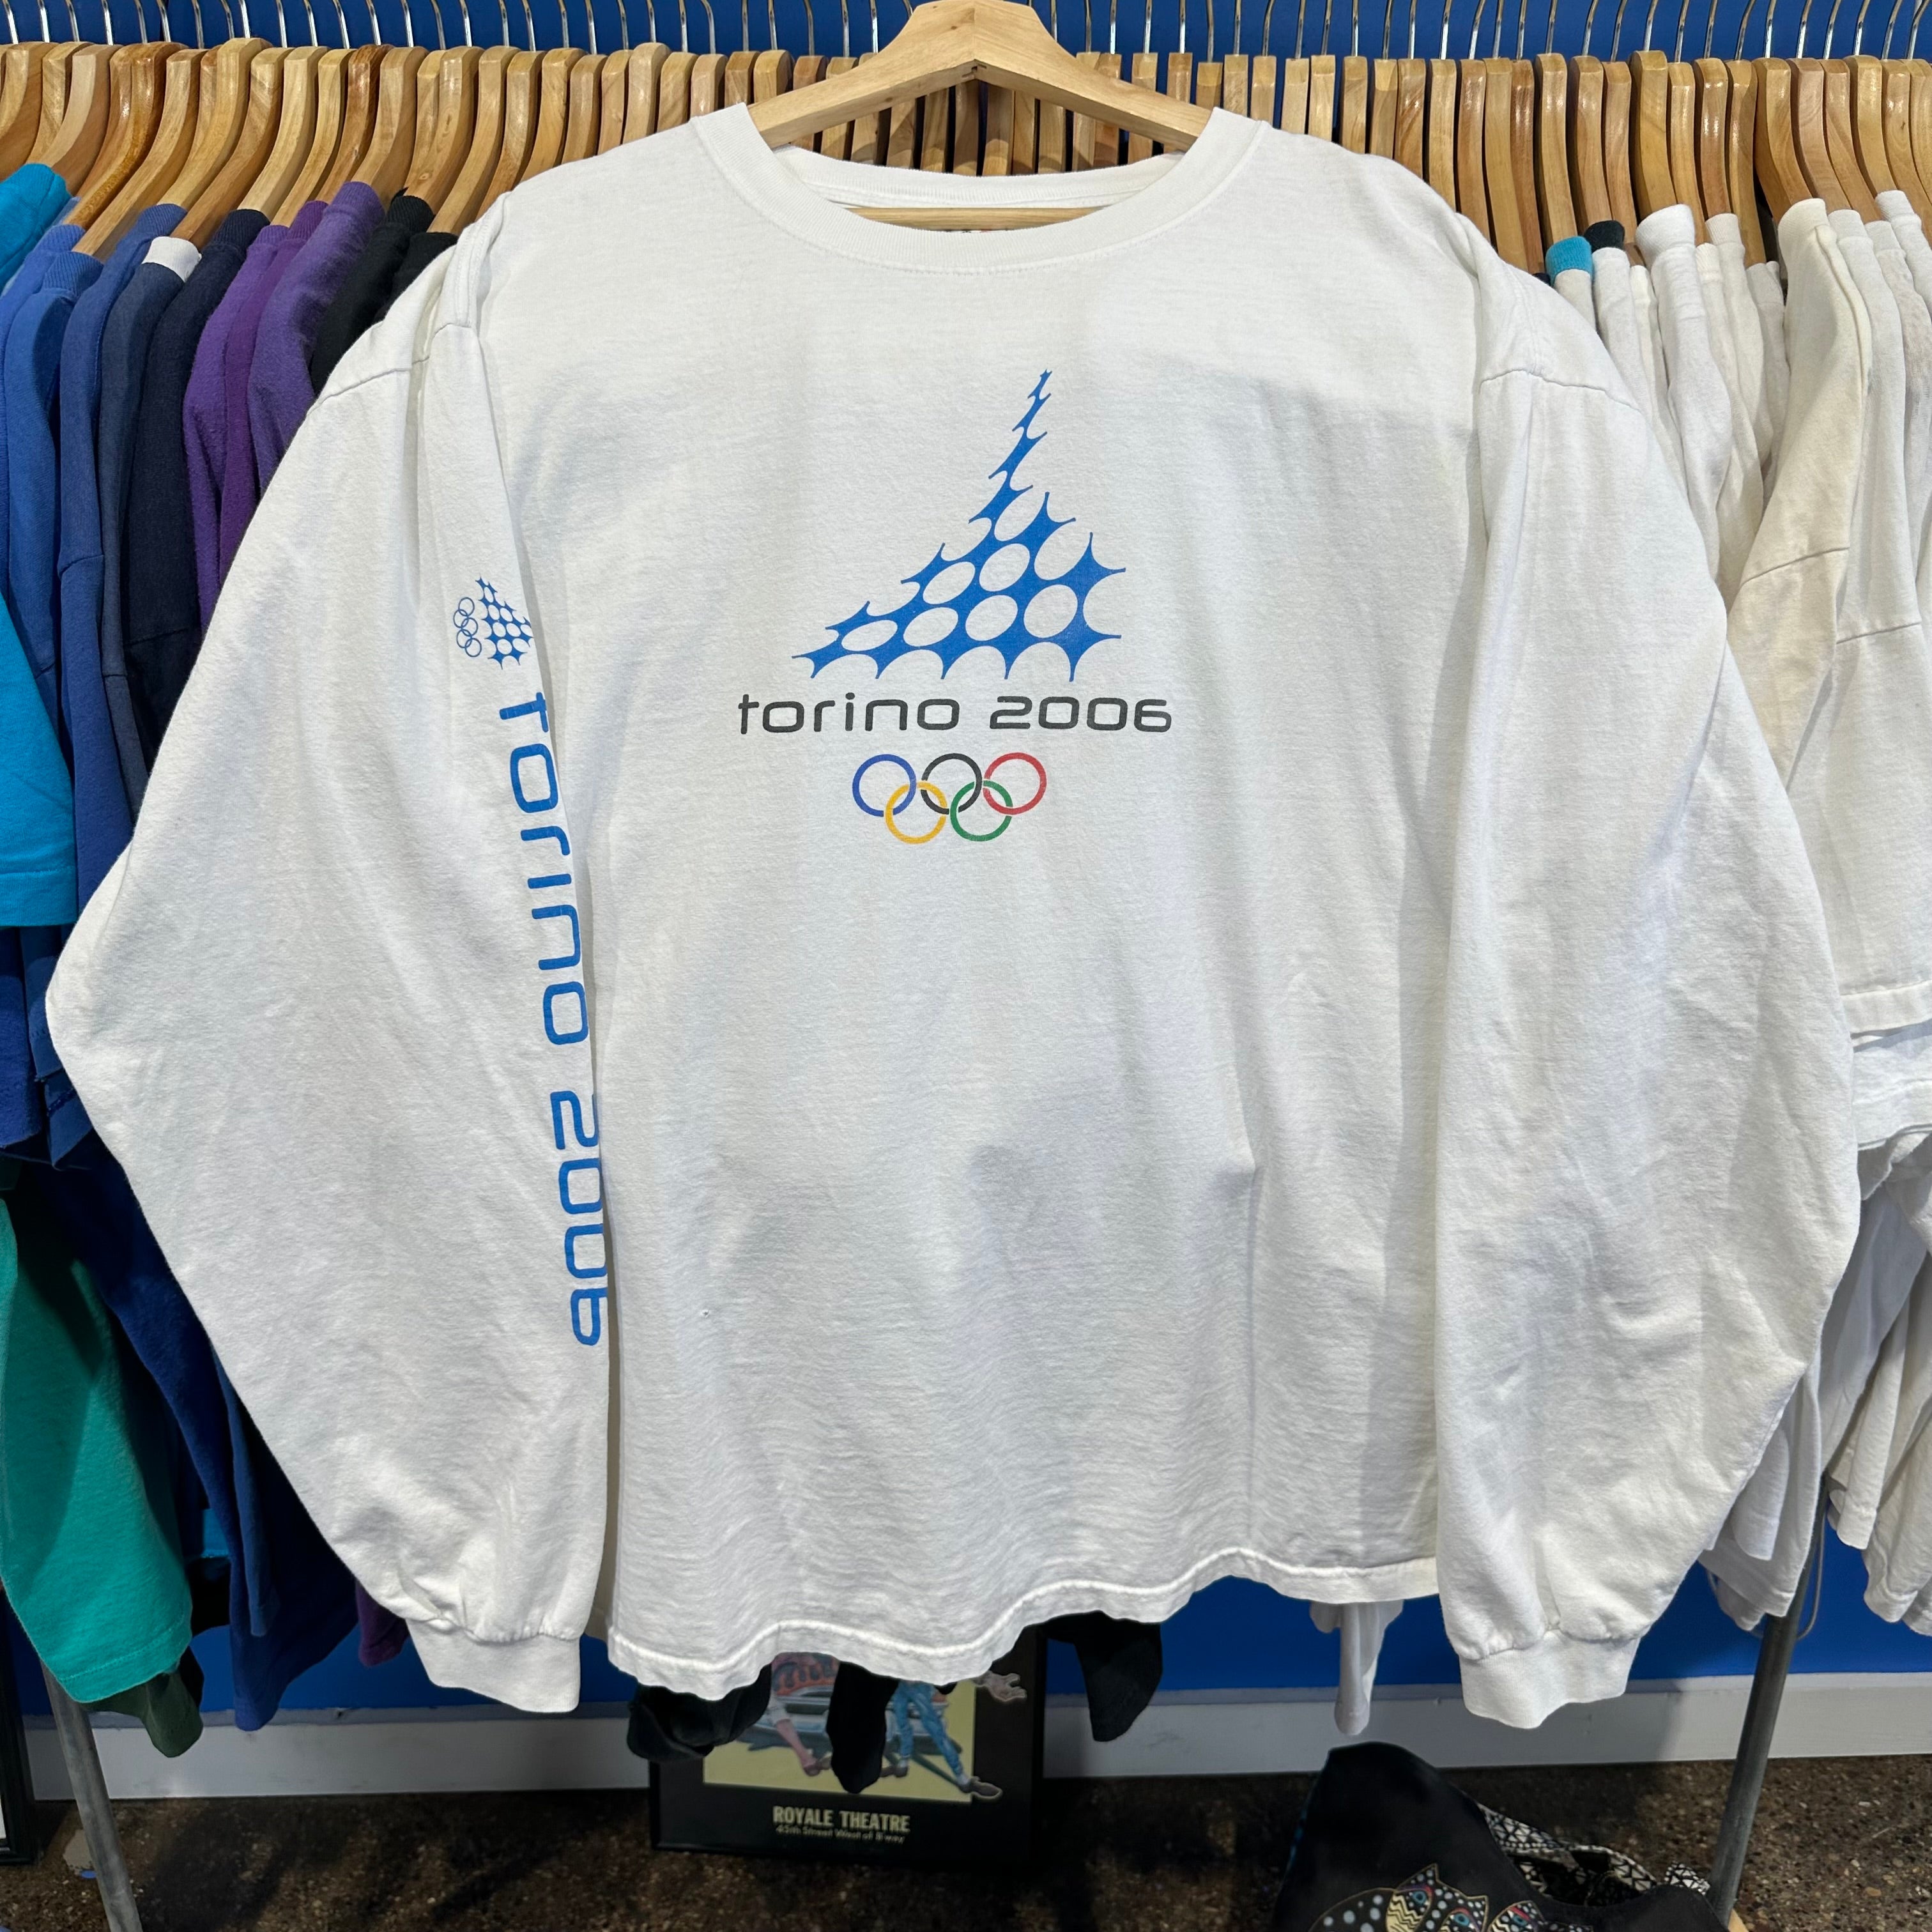 Torino 2006 Olympic T-Shirt